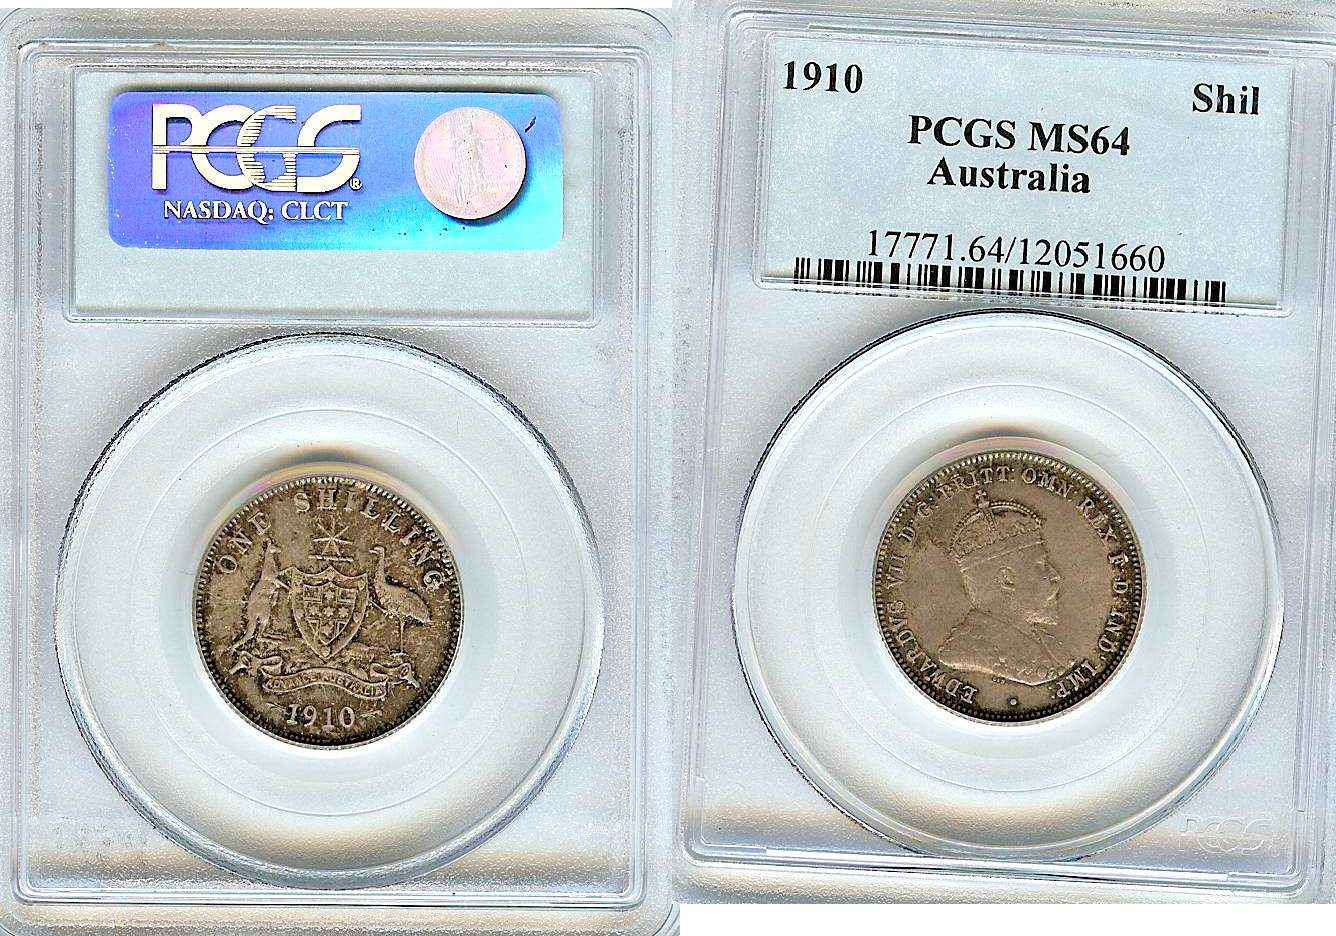 Australian Shilling 1910 PCGS MS64